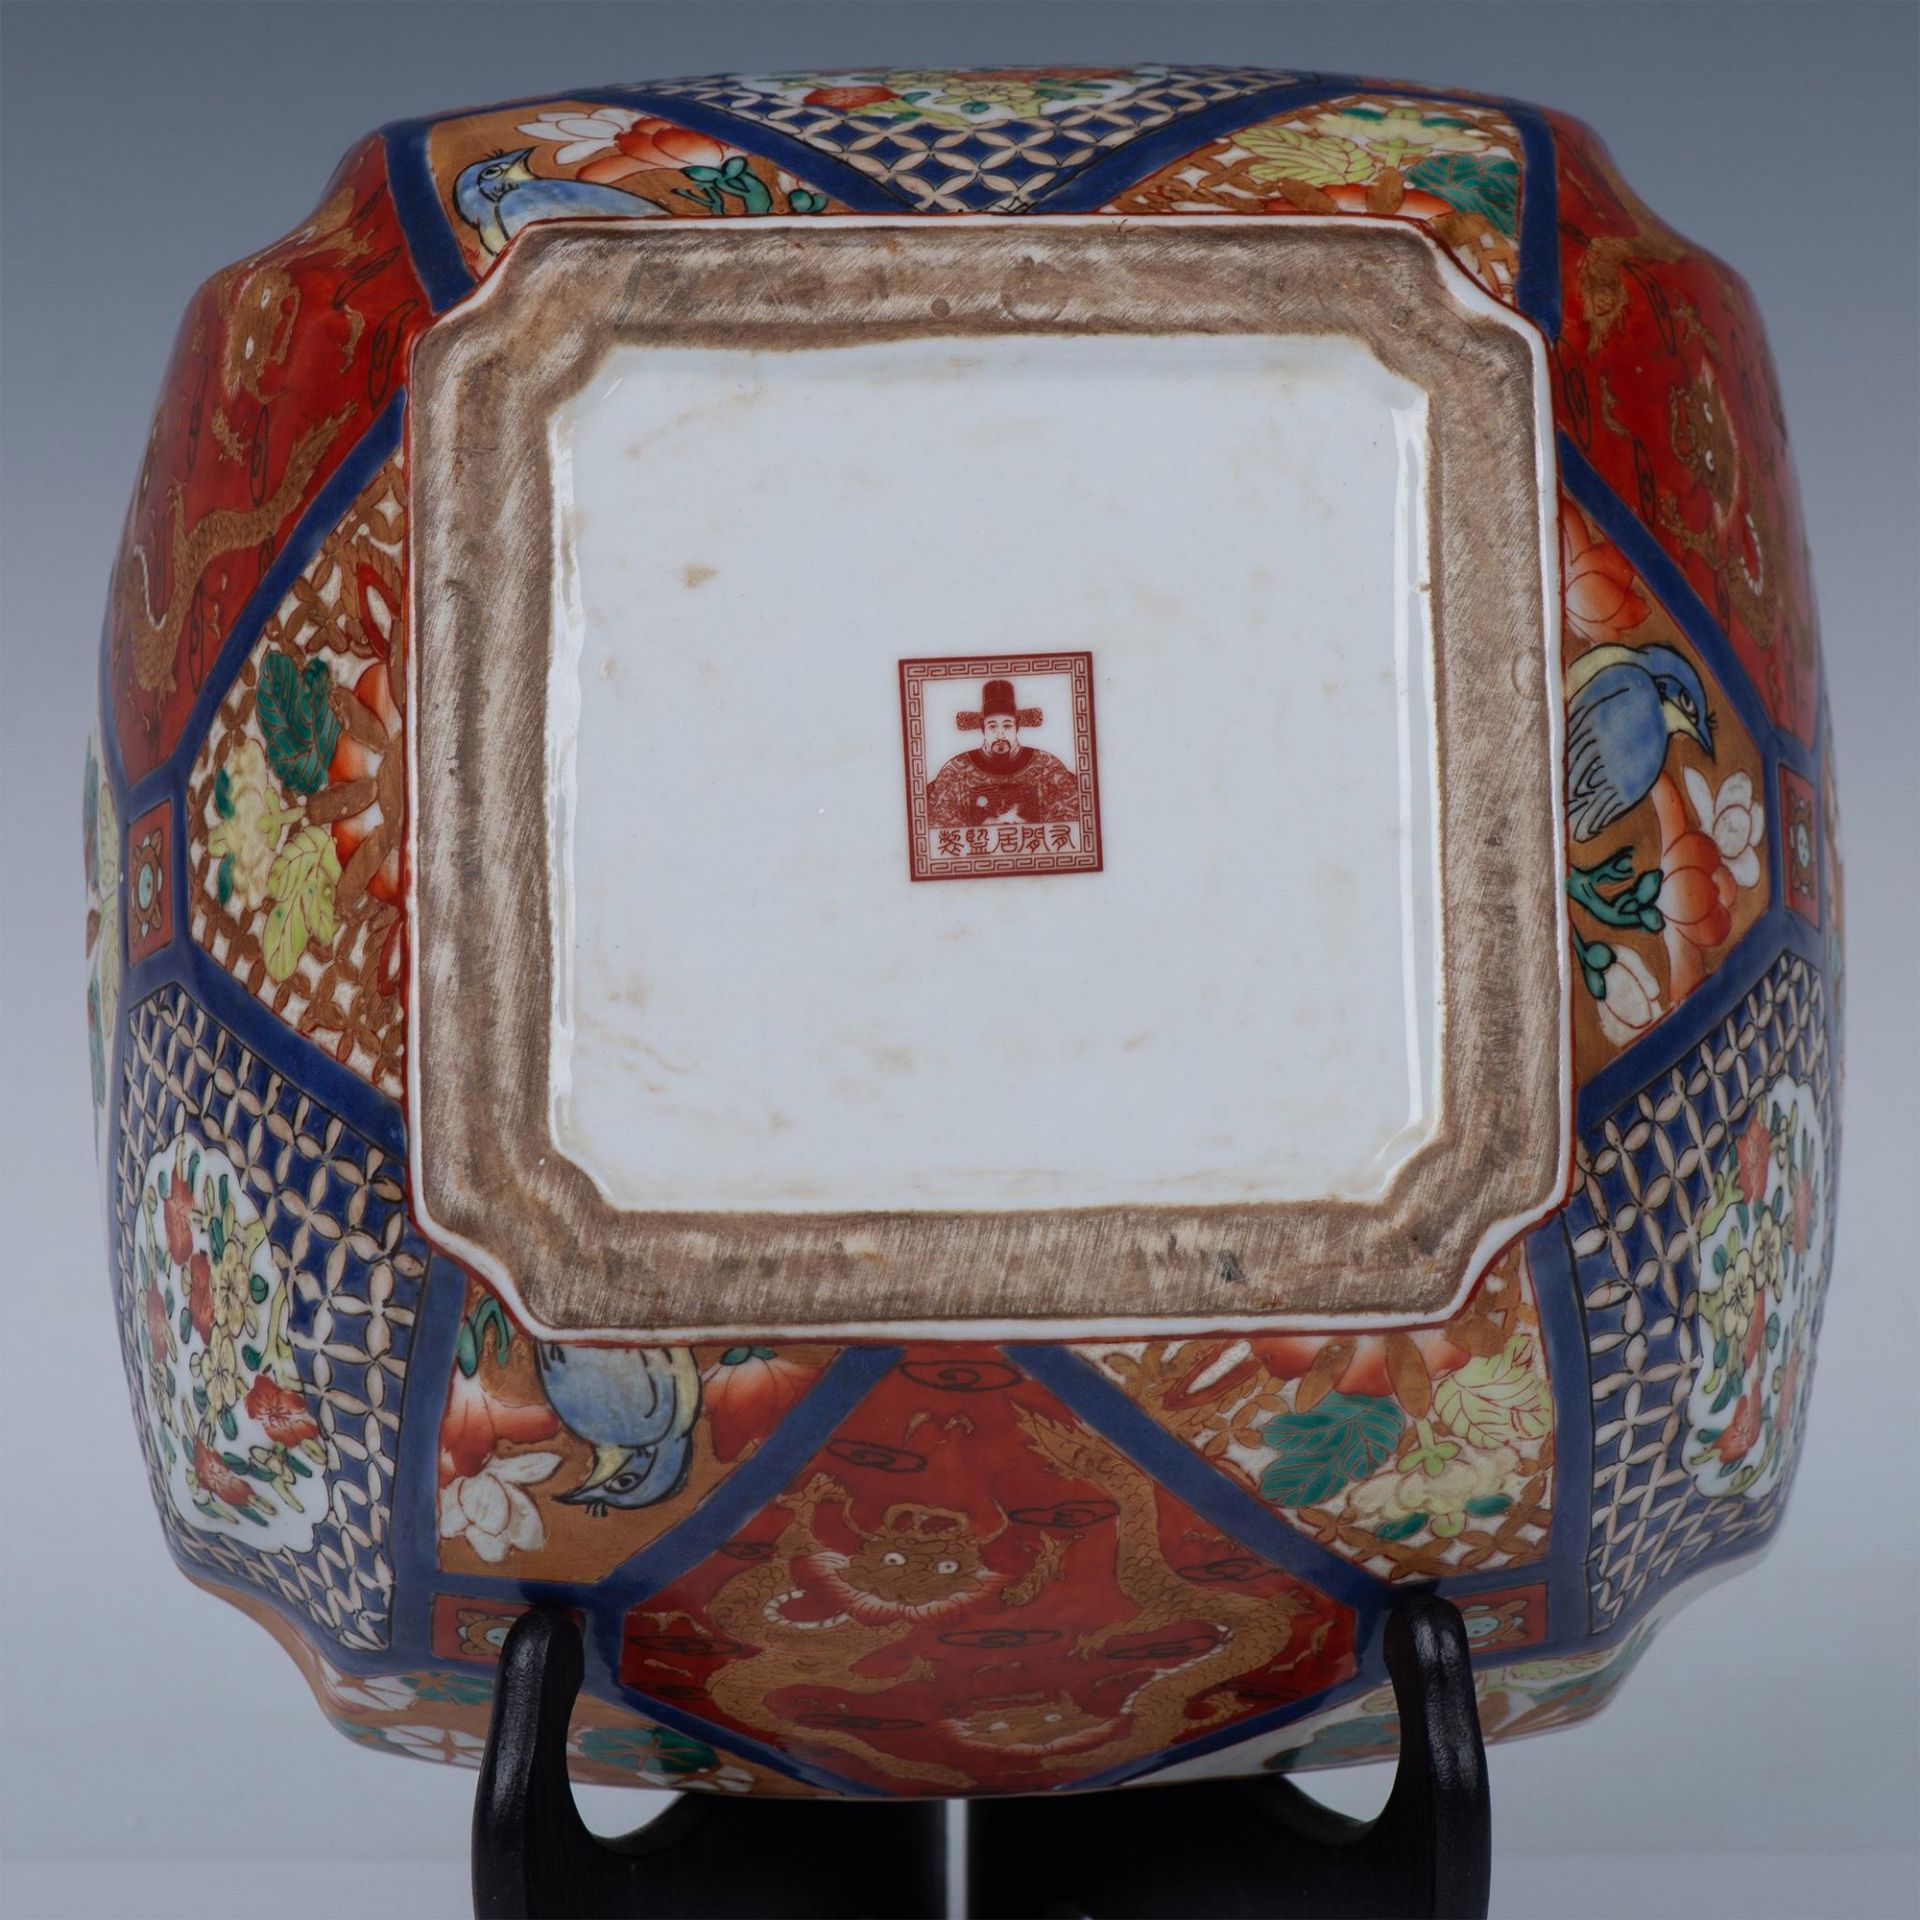 Chinese Ceramic Bowl, Foo Dogs, Cranes, Blue Bird - Image 4 of 4